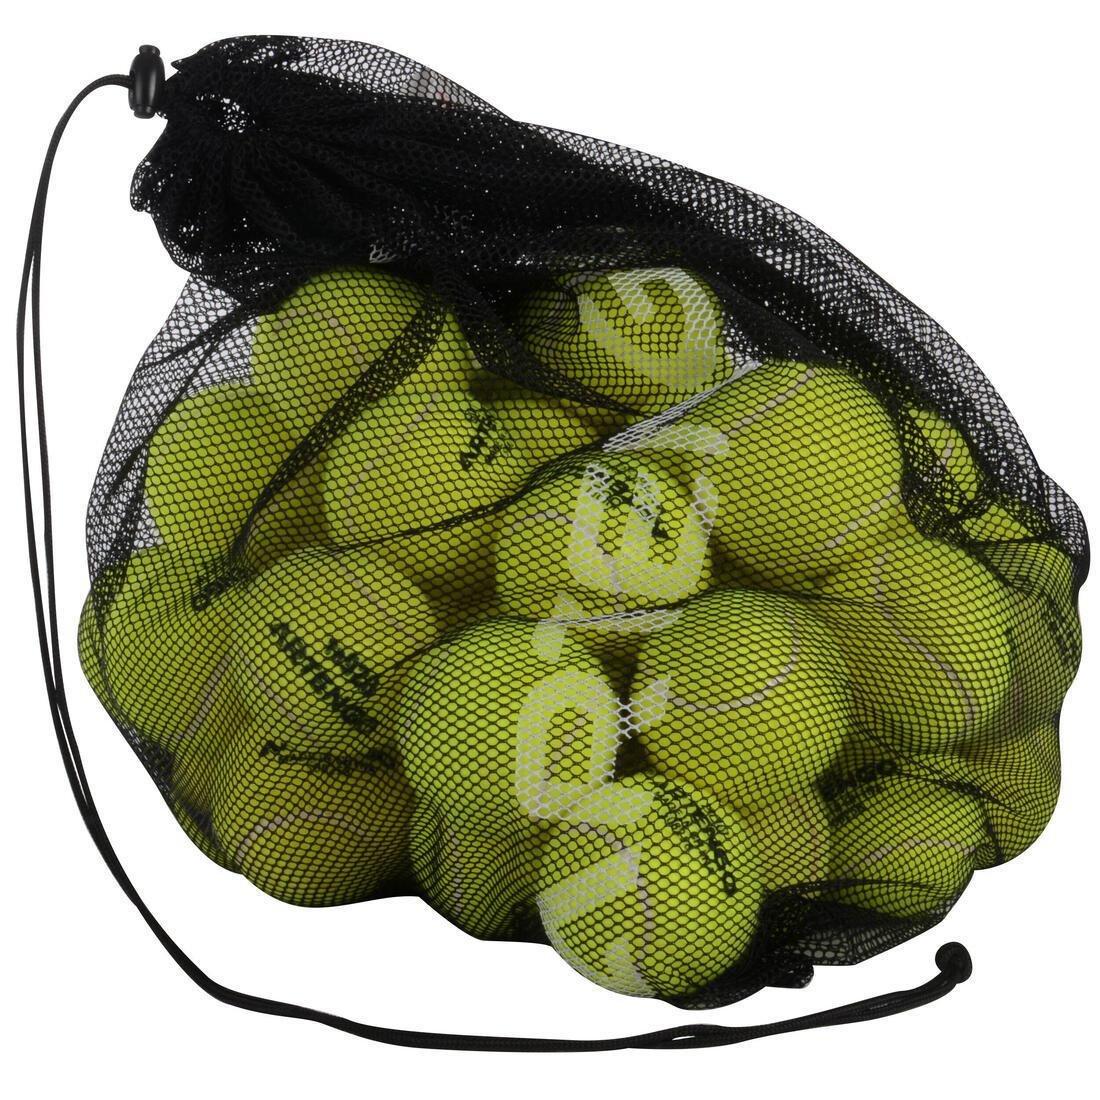 ARTENGO - Net For 60 Tennis Balls, Black